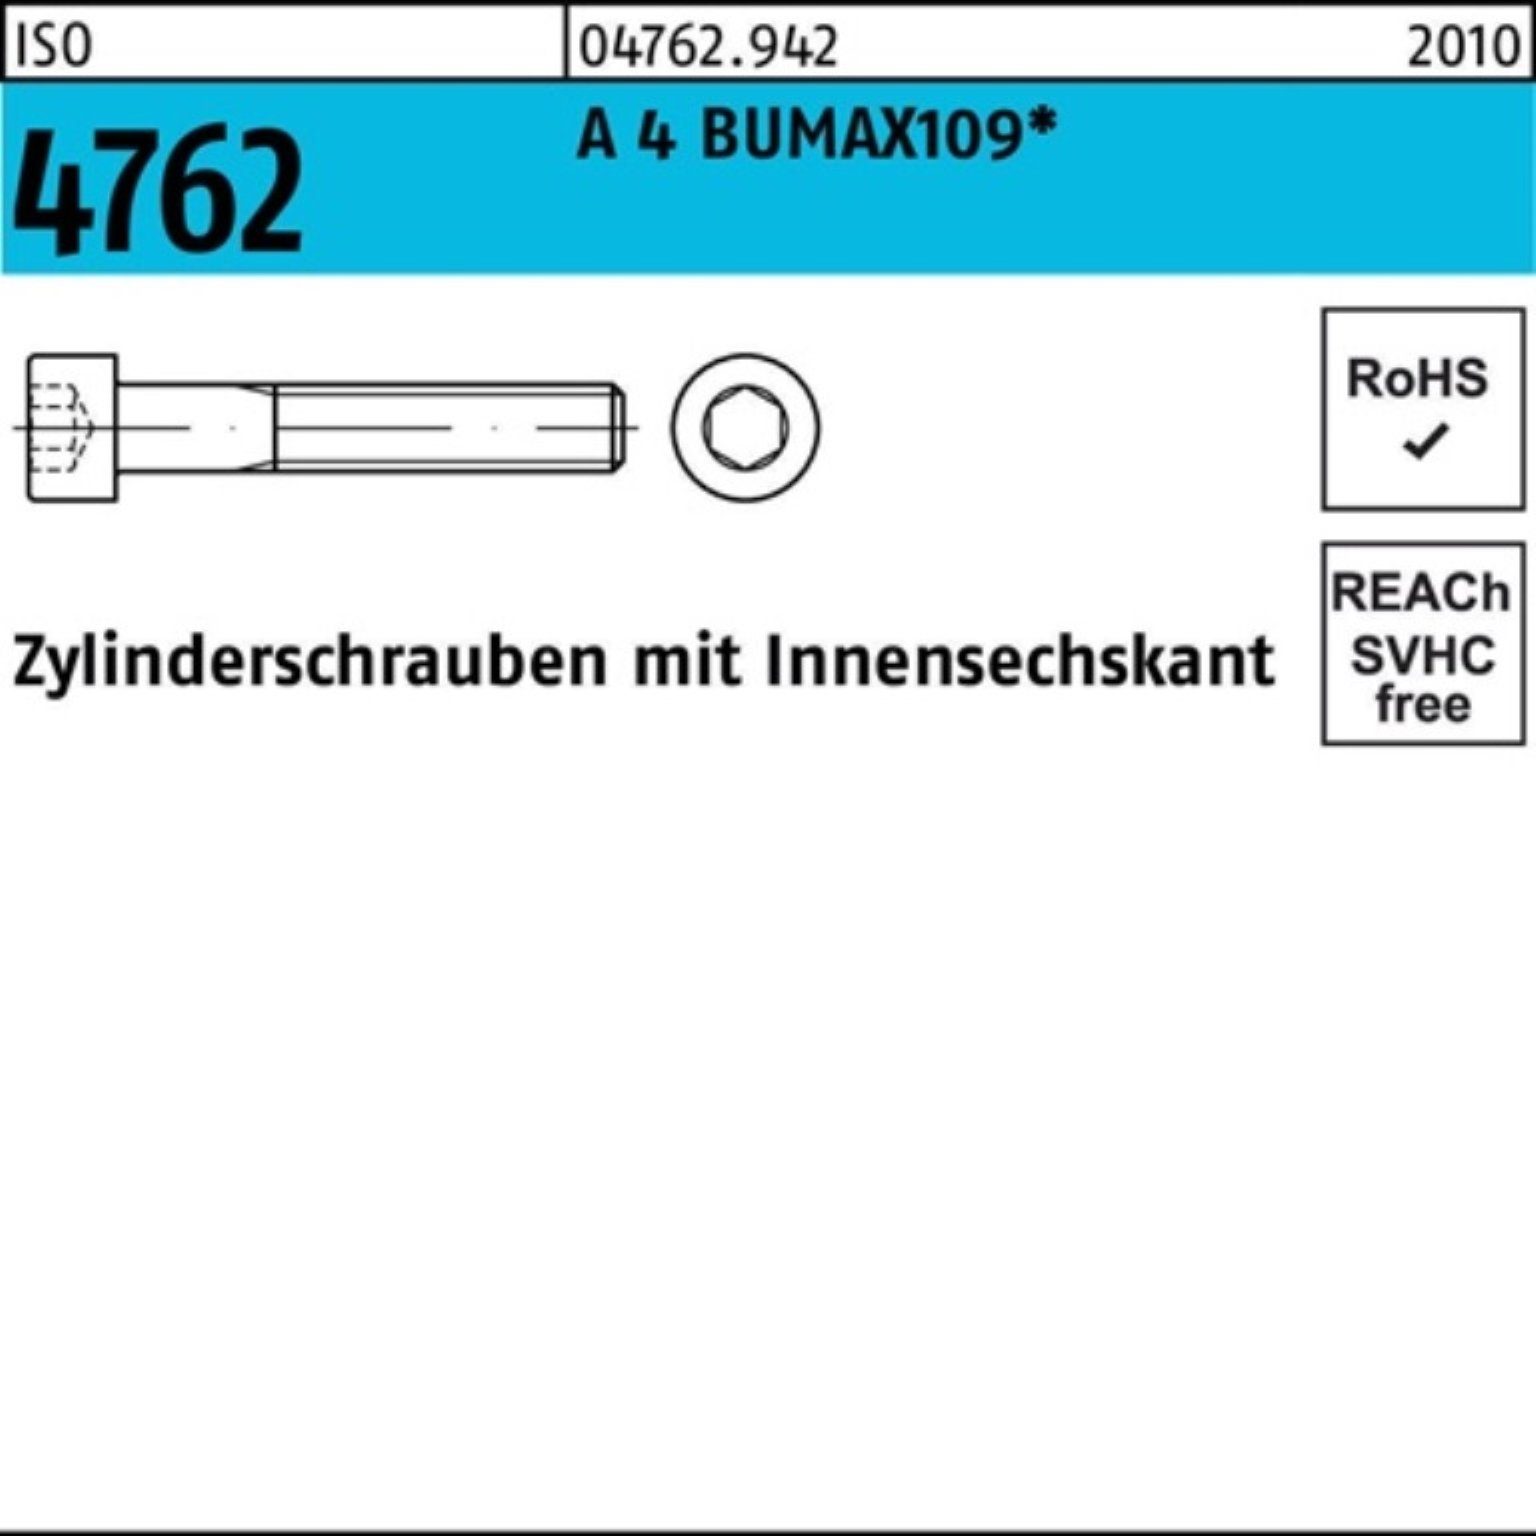 Pack A 4 M16x BUMAX109 4762 100er 50 Bufab ISO 25 Zylinderschraube Innen-6kt Zylinderschraube